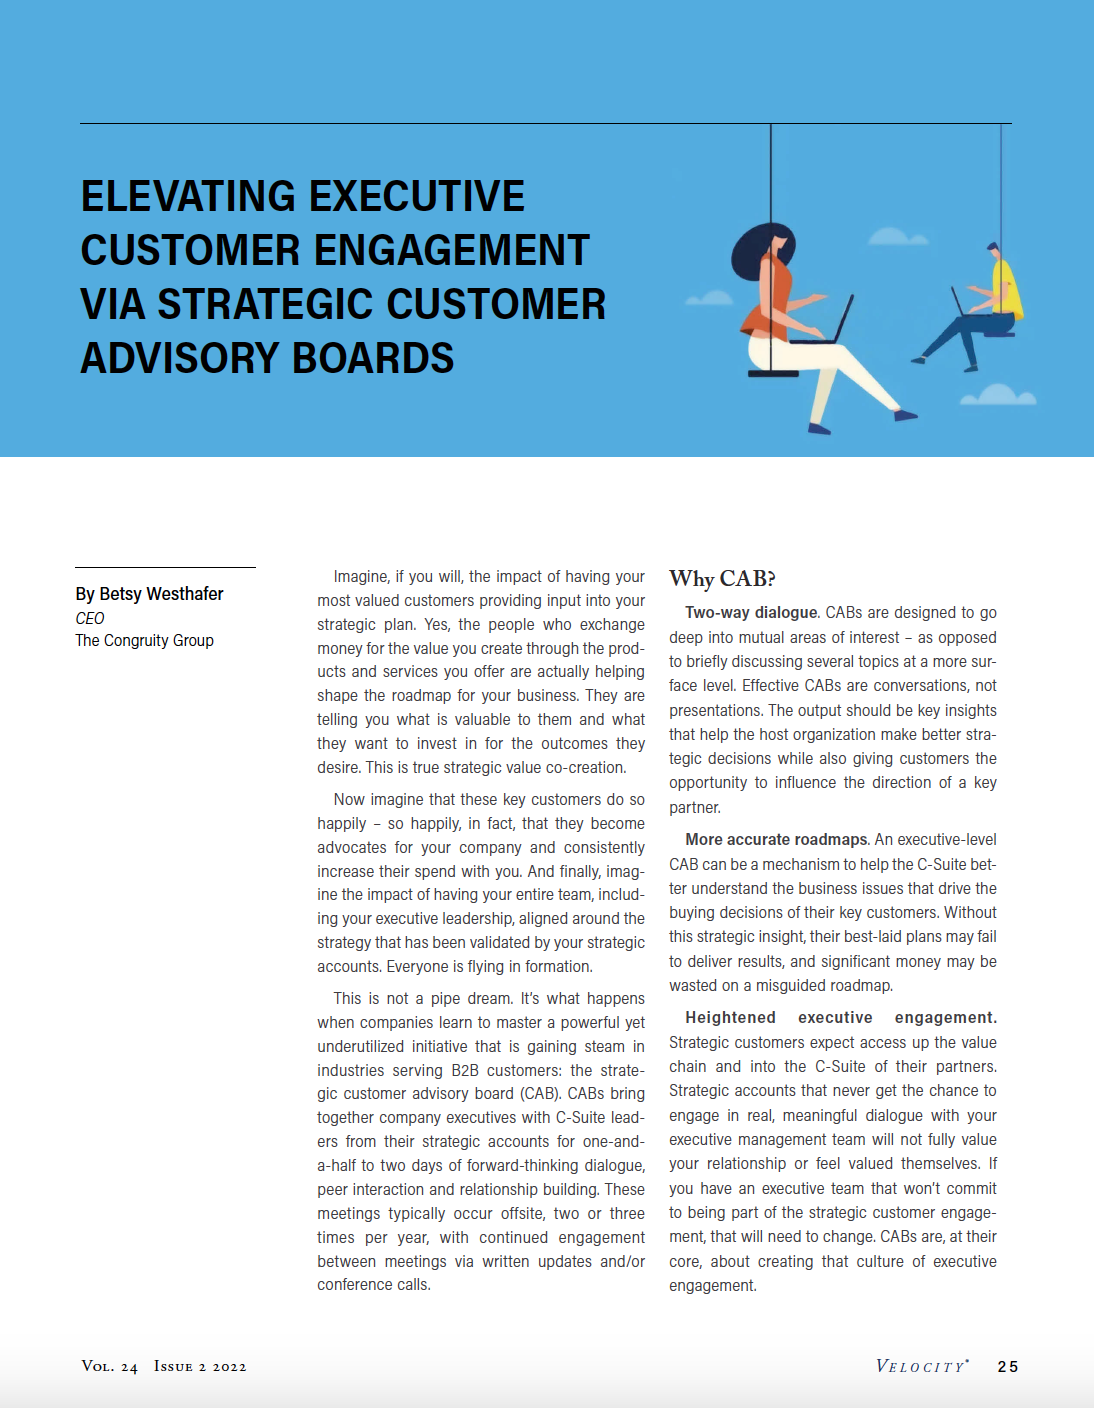 Elevating Executive Customer Engagement via Customer Advisory Board article